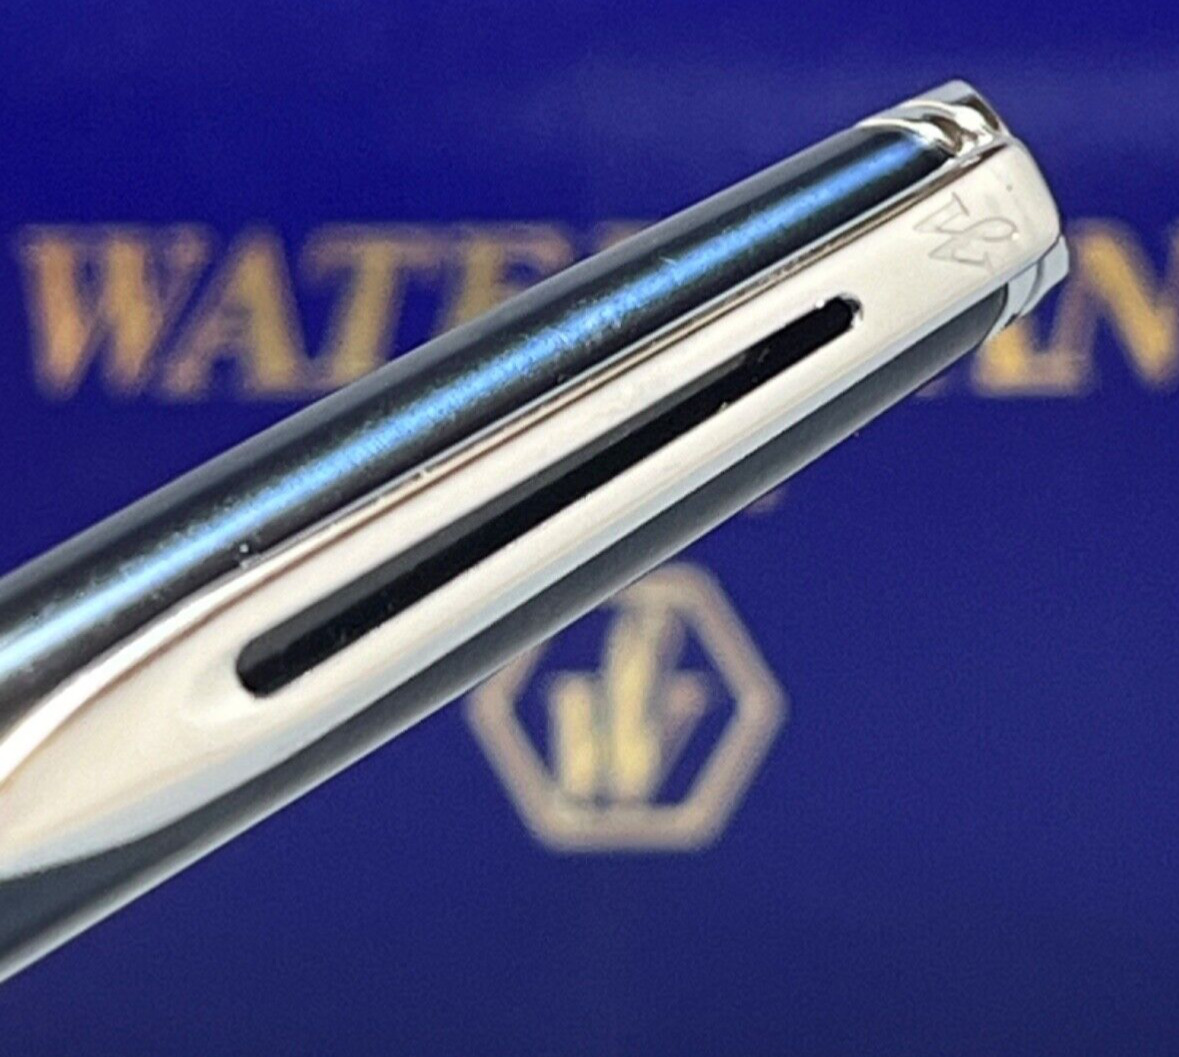 Waterman Hemisphere Ballpoint Pen - Blue Metallic/Chrome Trim - Display Model